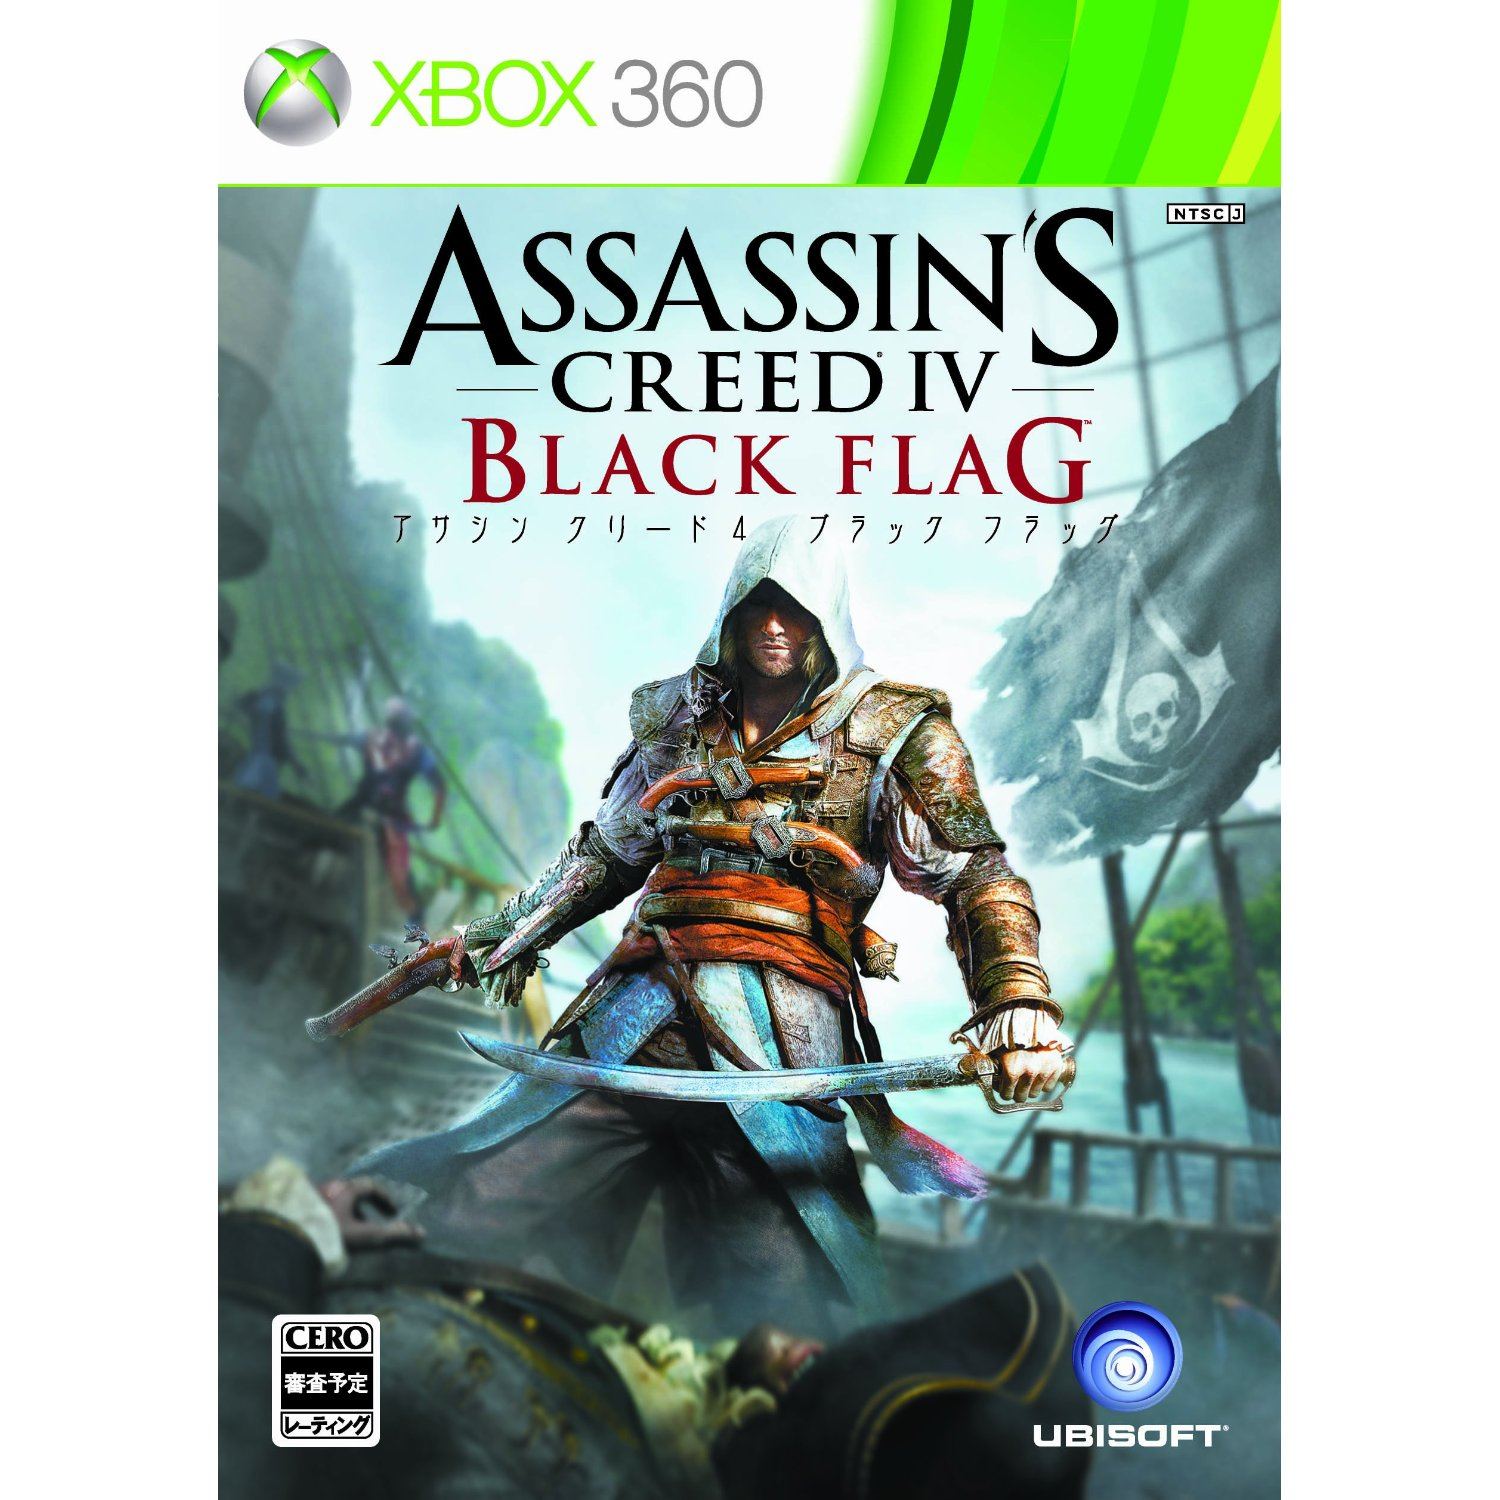 Schipbreuk Dom Glad Assassin's Creed 4 Black Flag for Xbox360